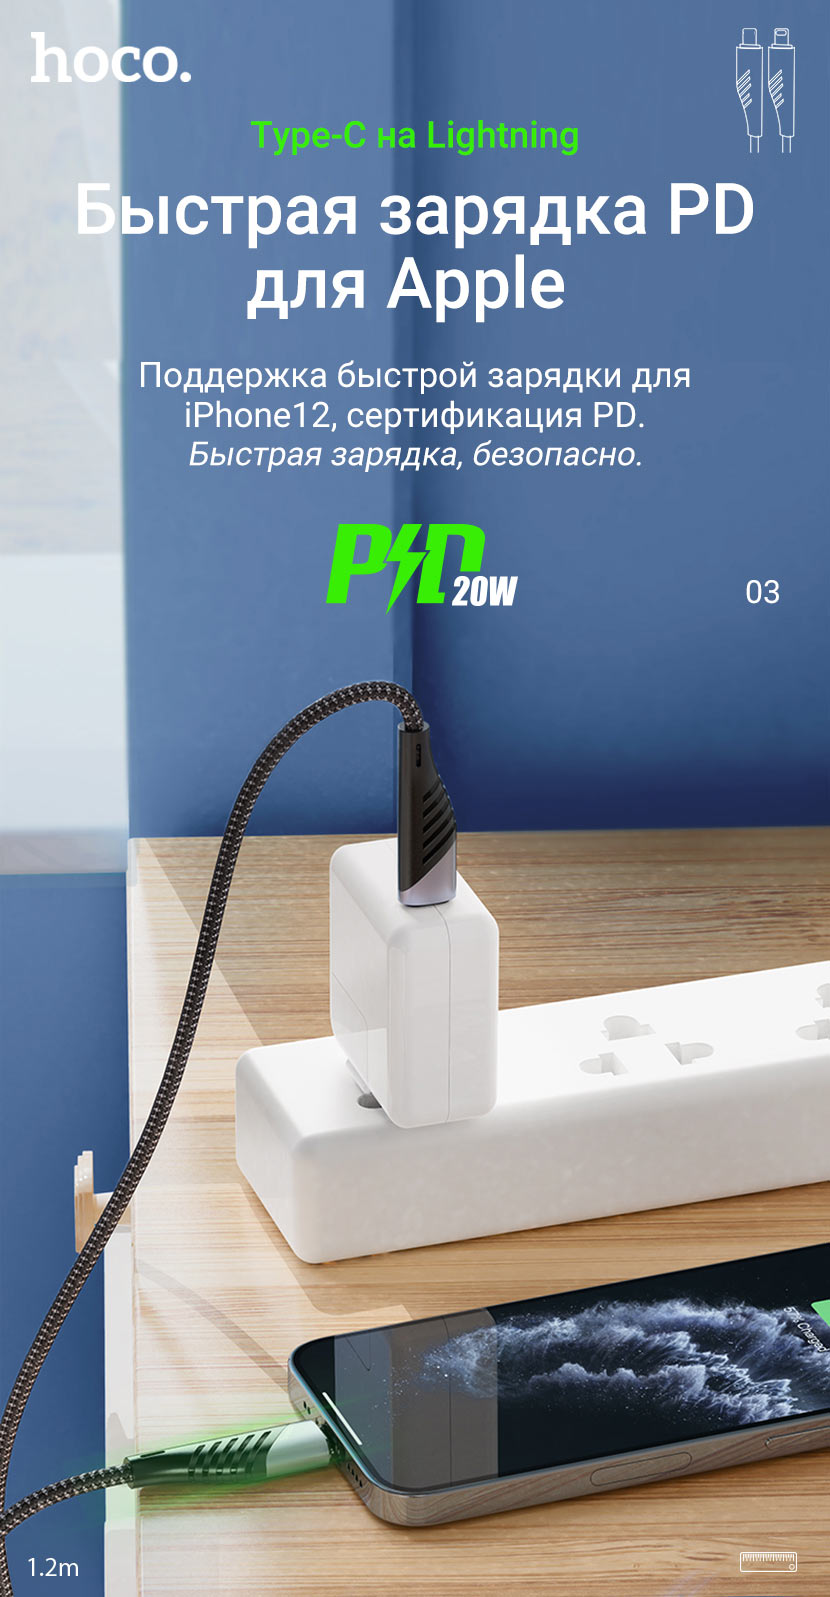 hoco news u95 freeway pd charging data cable type c to lightning ru